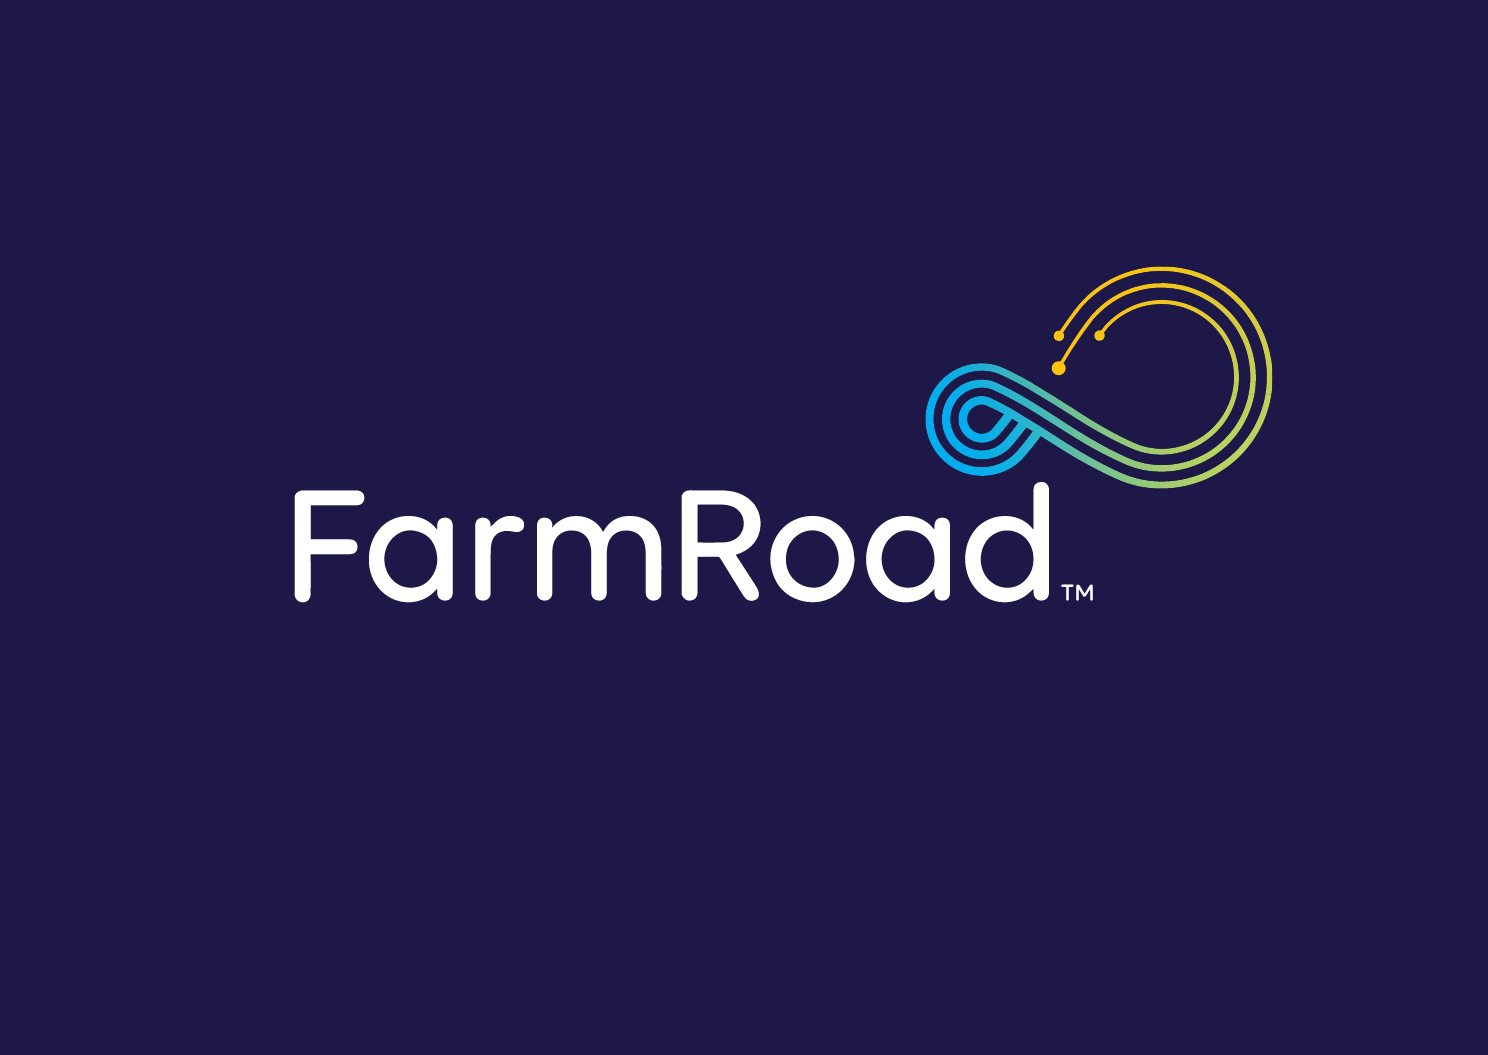 FarmRoad logo